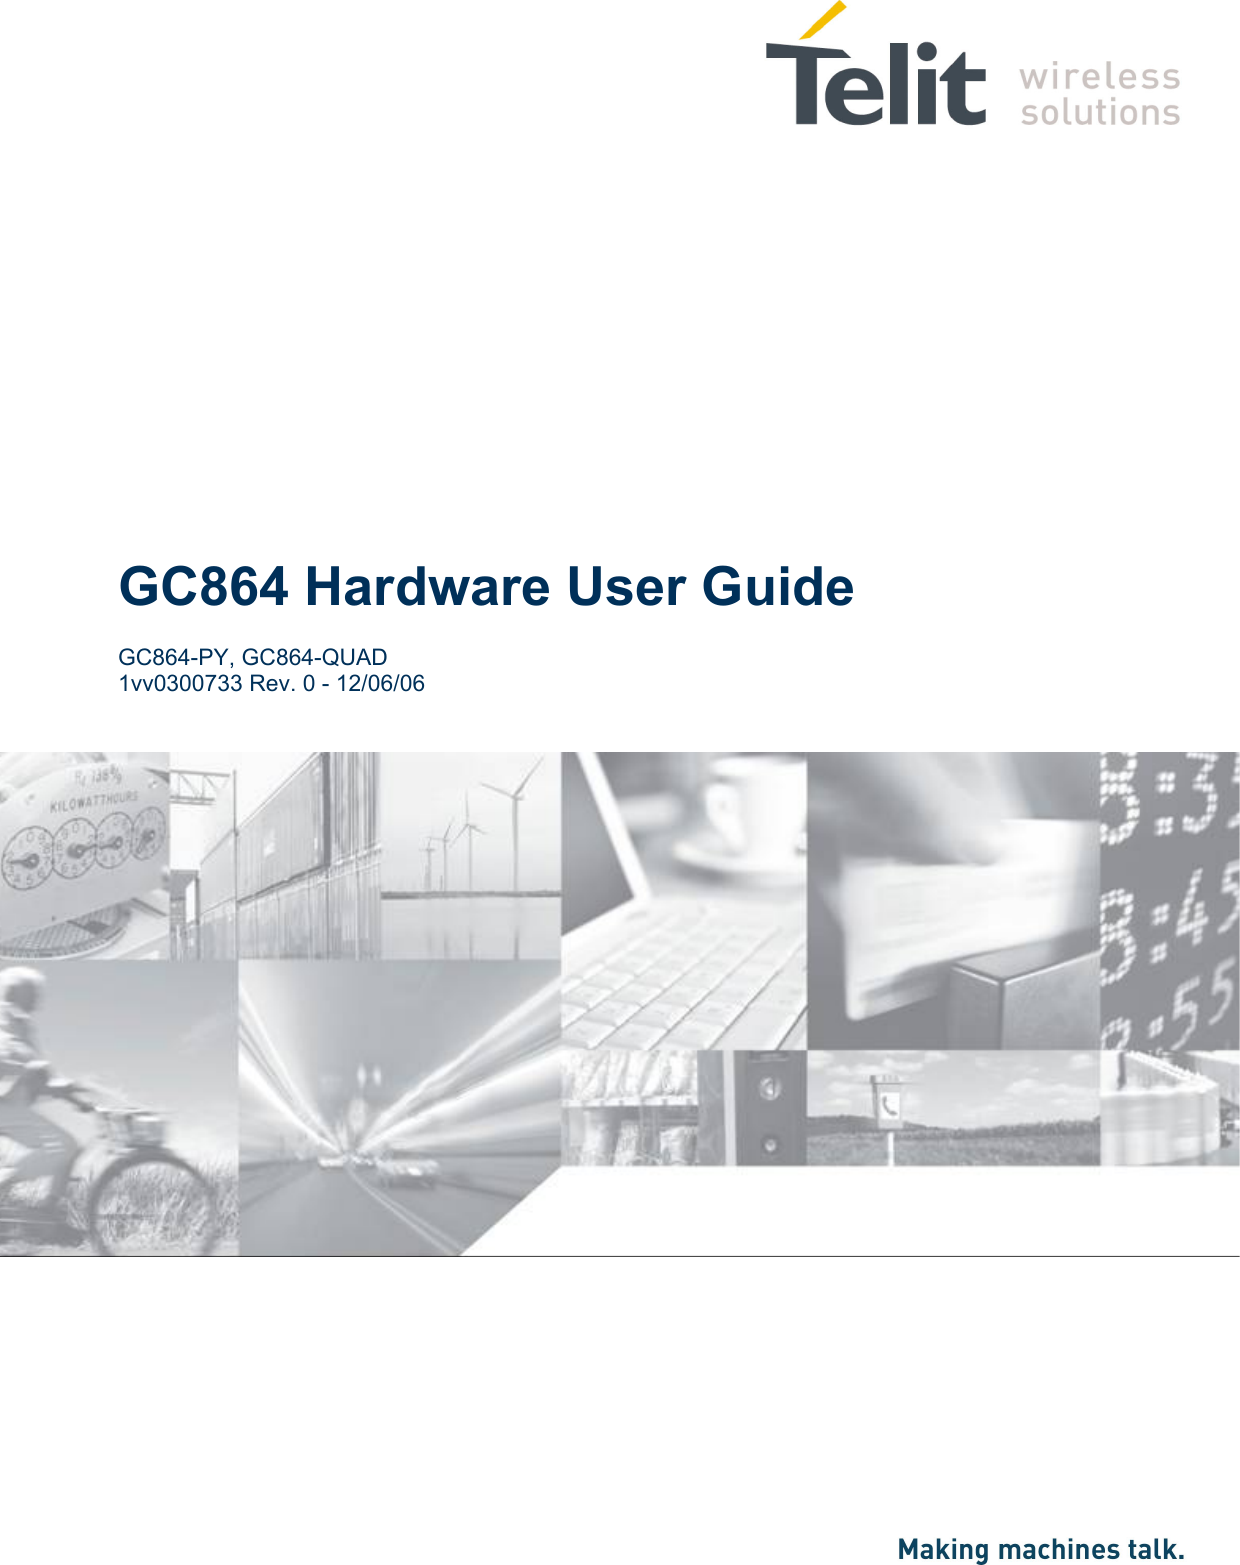                GC864 Hardware User Guide  GC864-PY, GC864-QUAD 1vv0300733 Rev. 0 - 12/06/06      